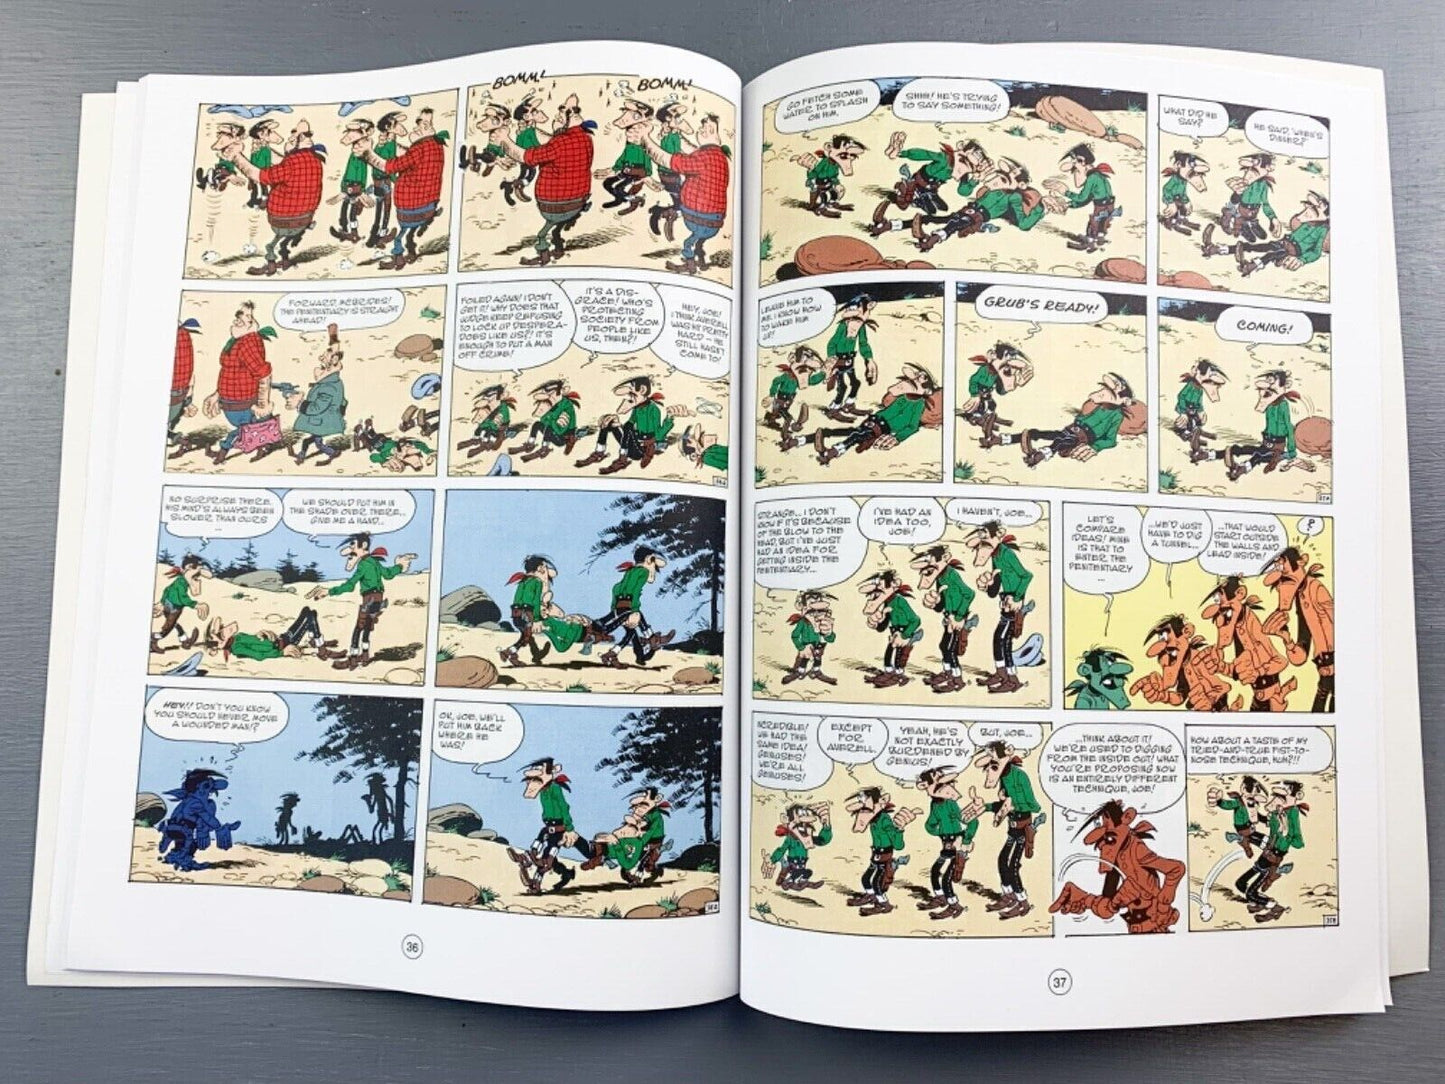 58 The Daltons’ Stash Lucky Luke Cinebook Paperback UK Comic Book